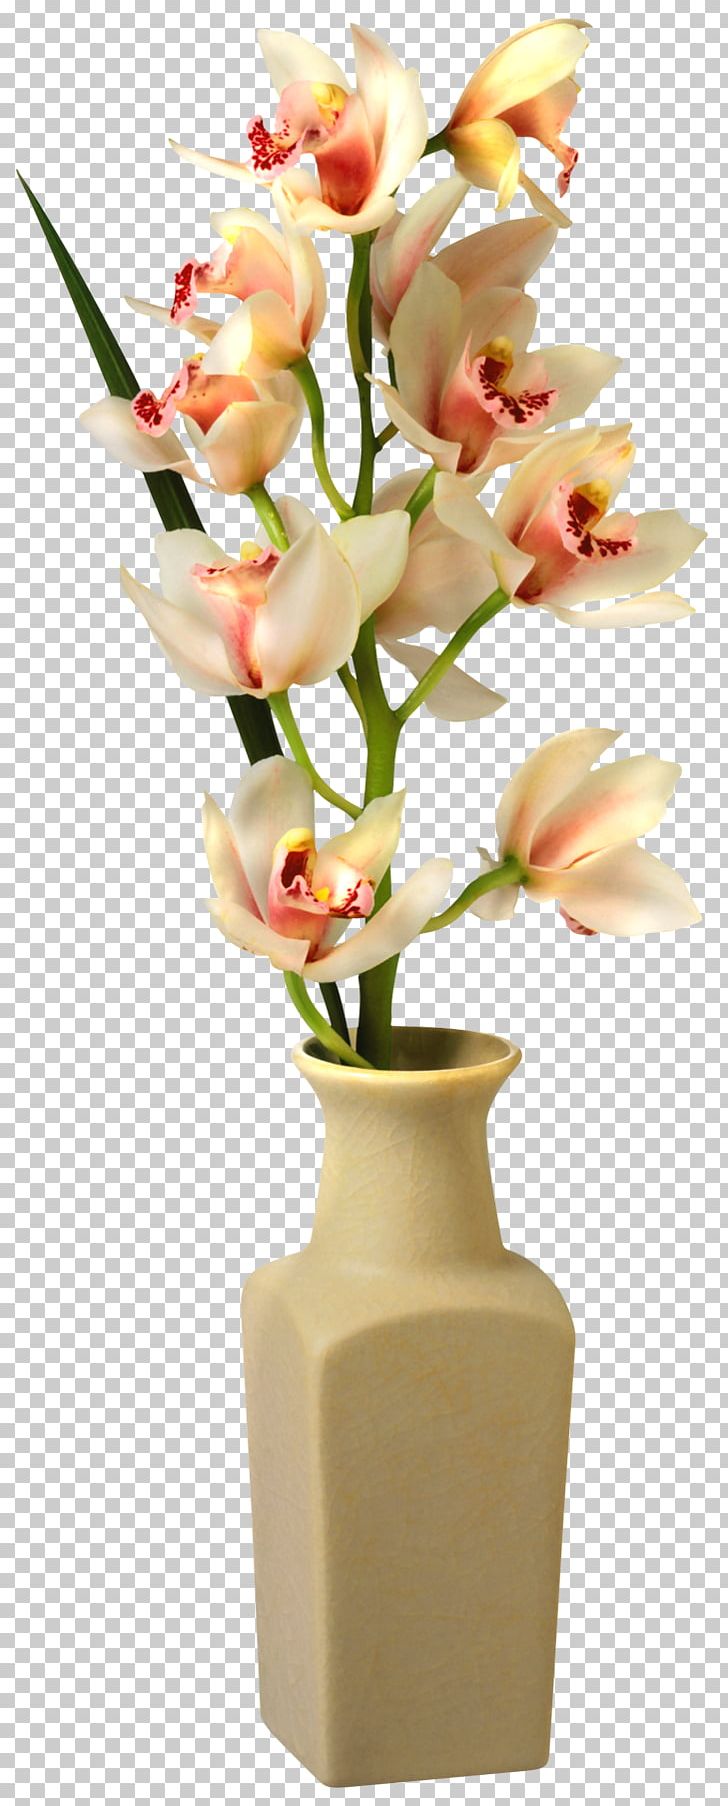 Vase Flower PNG, Clipart, Artificial Flower, Cut Flowers, Floral Design, Floristry, Flower Free PNG Download